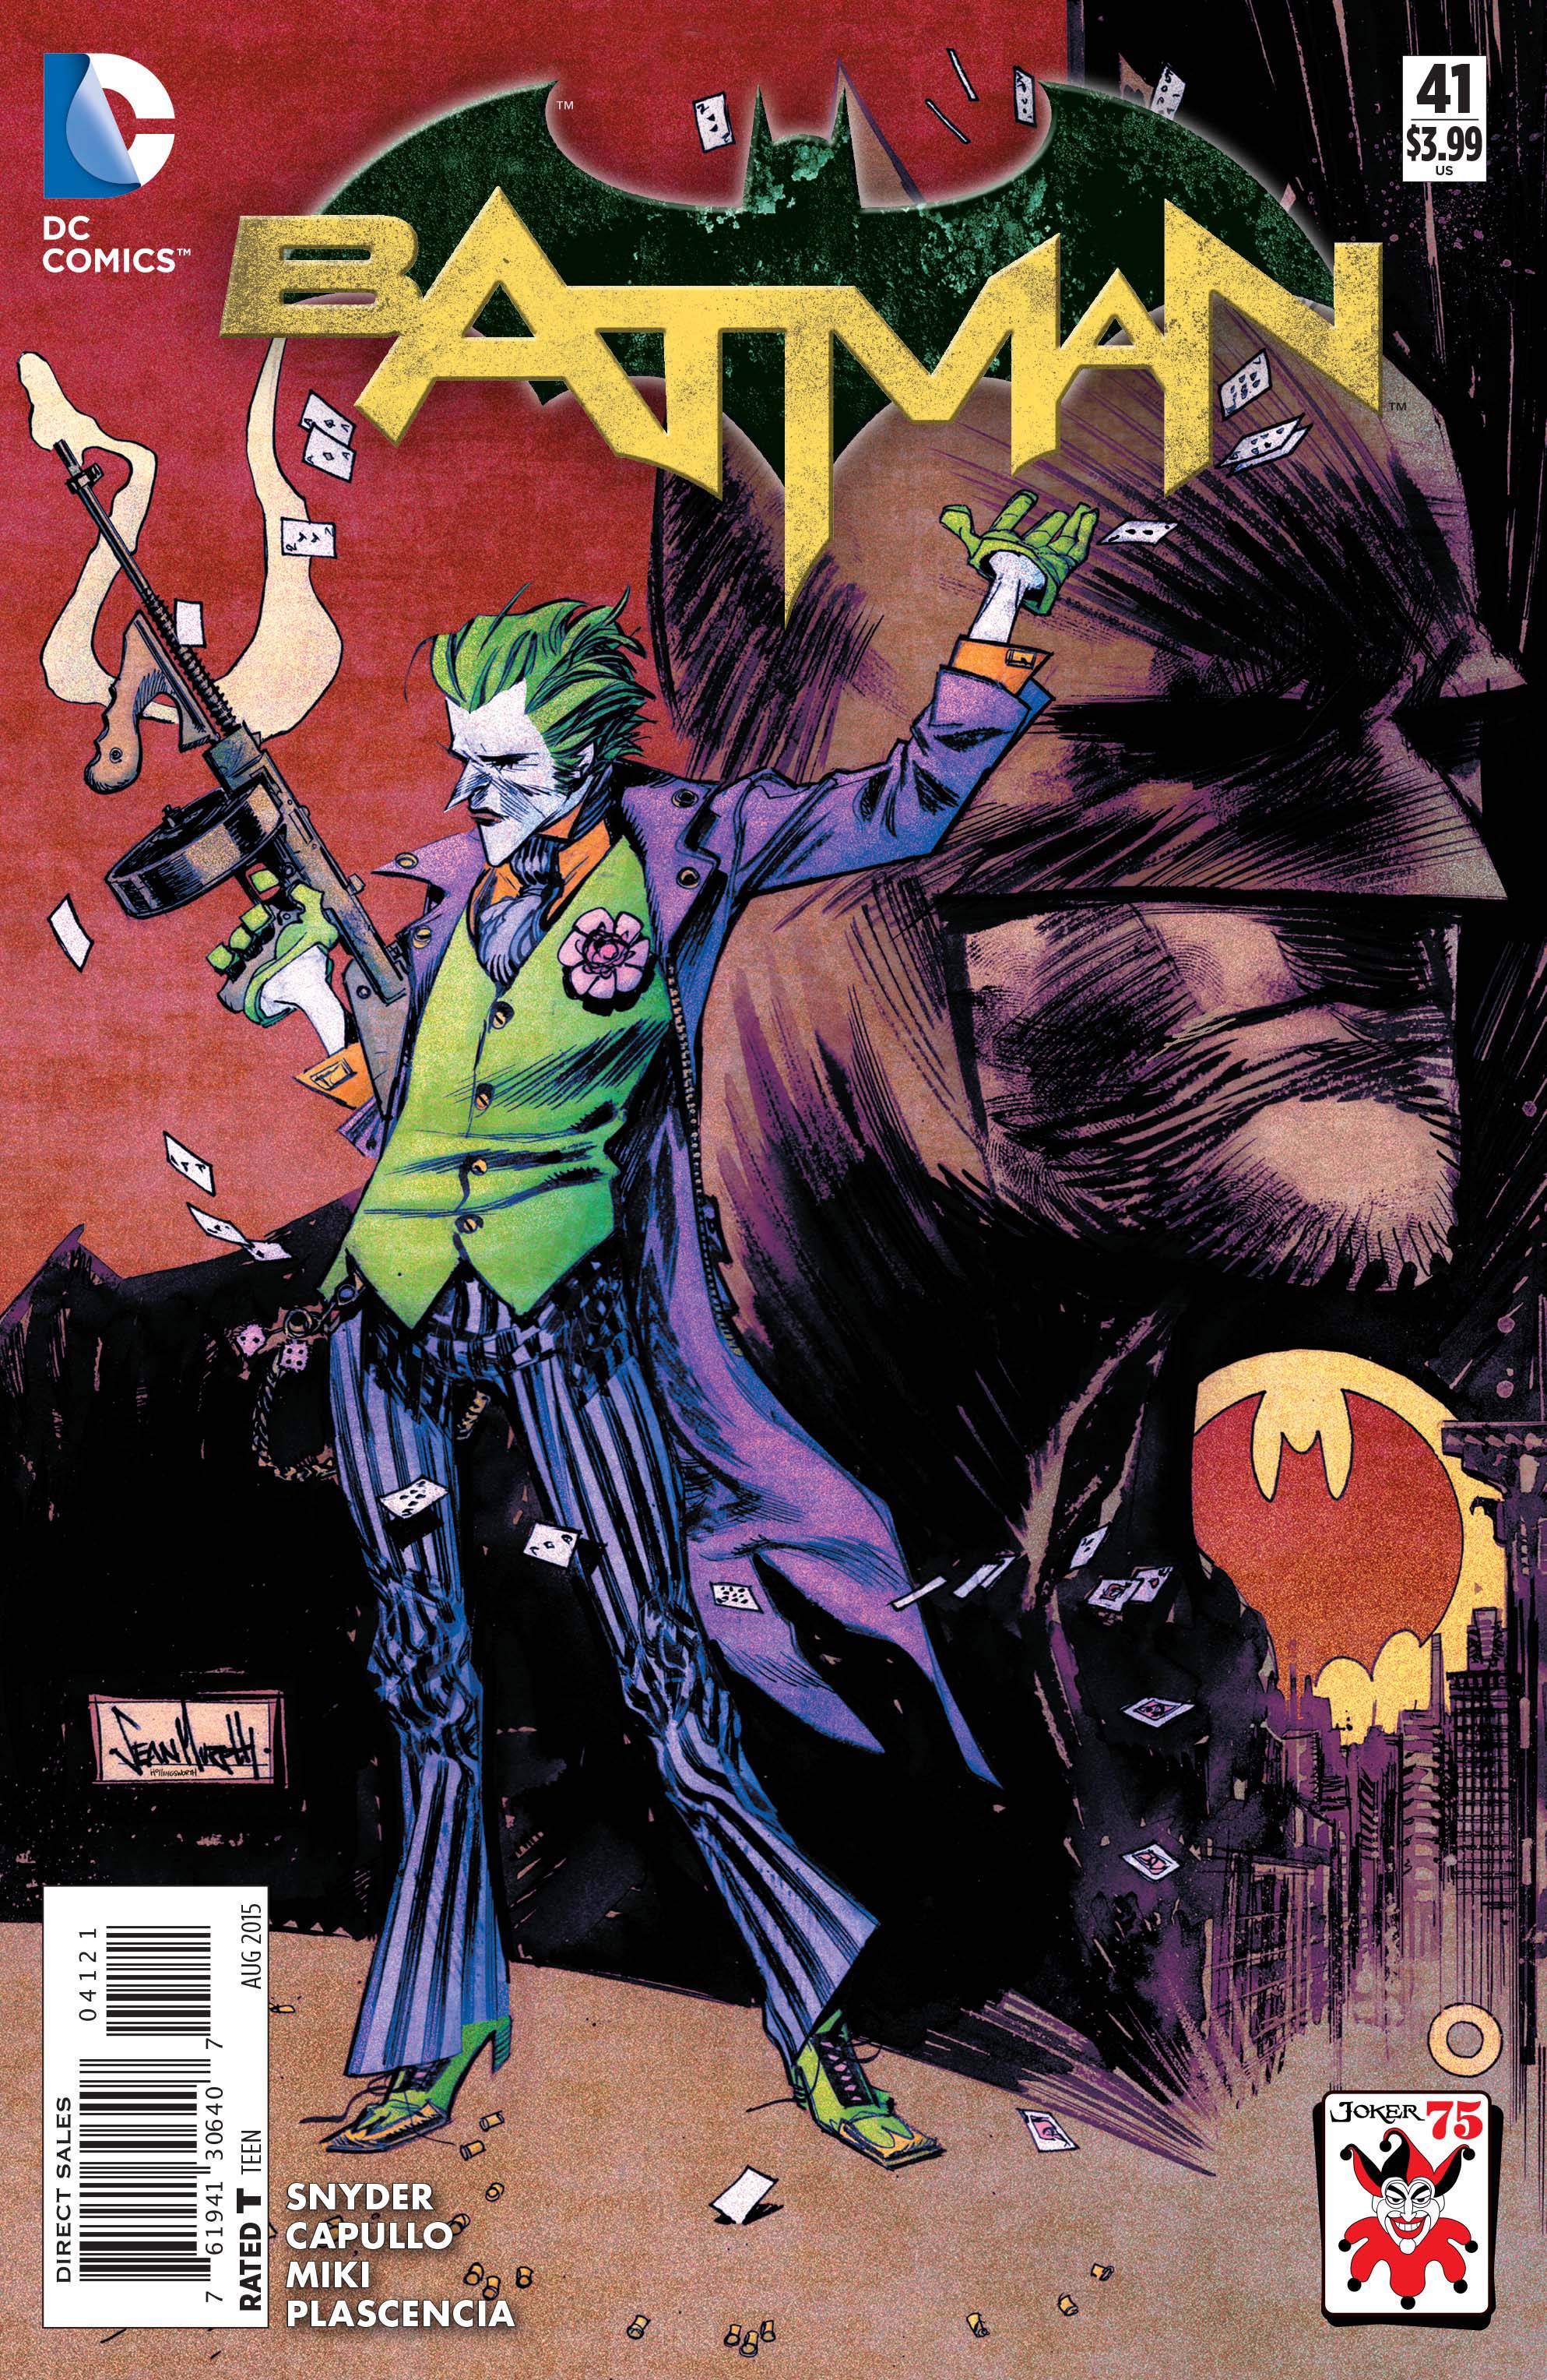 joker batman comics